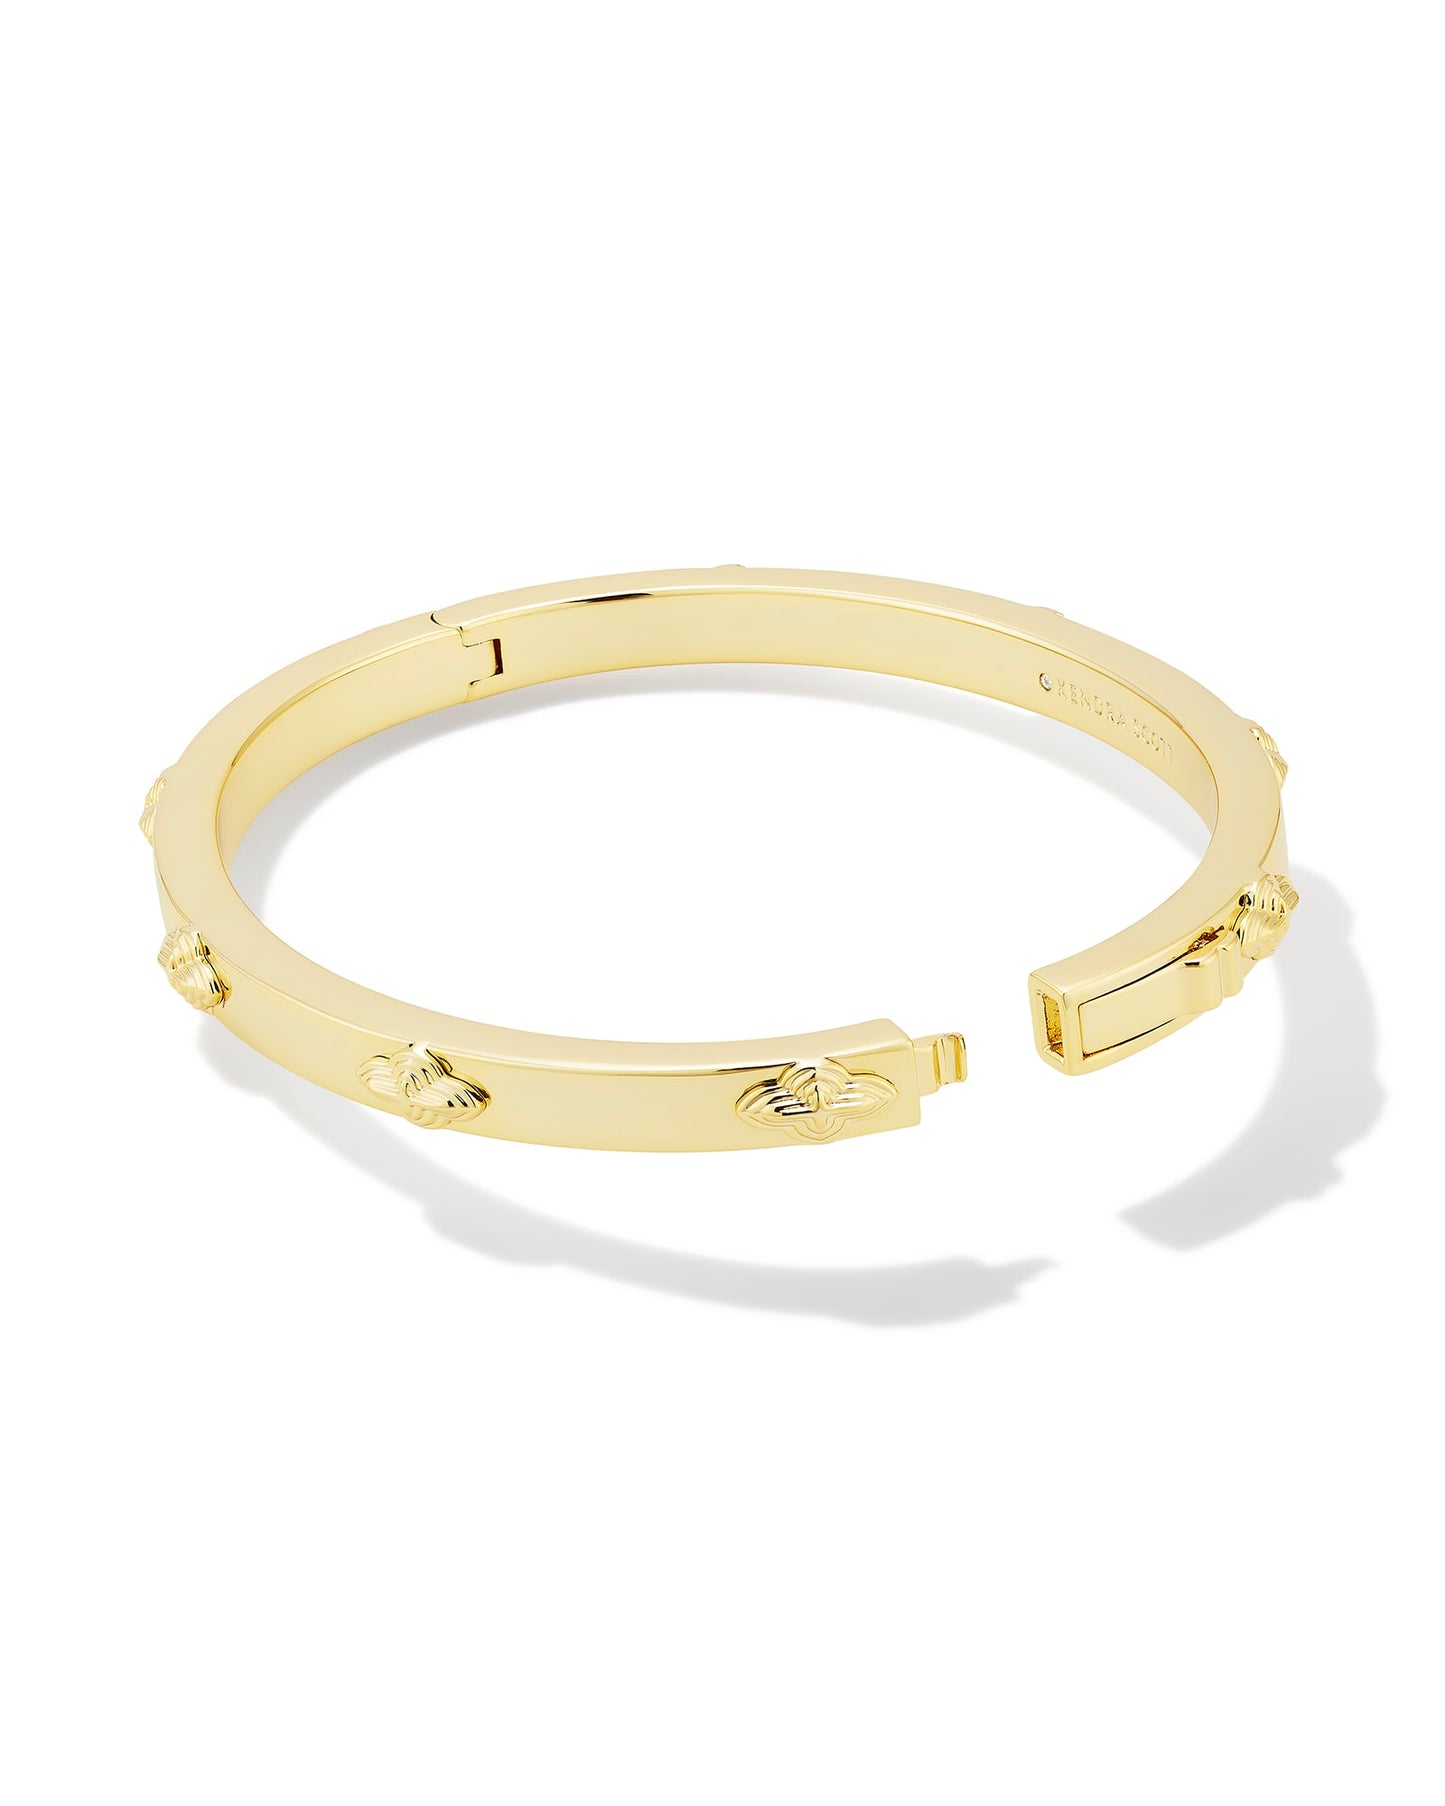 Abbie Metal Bangle Bracelet in Gold